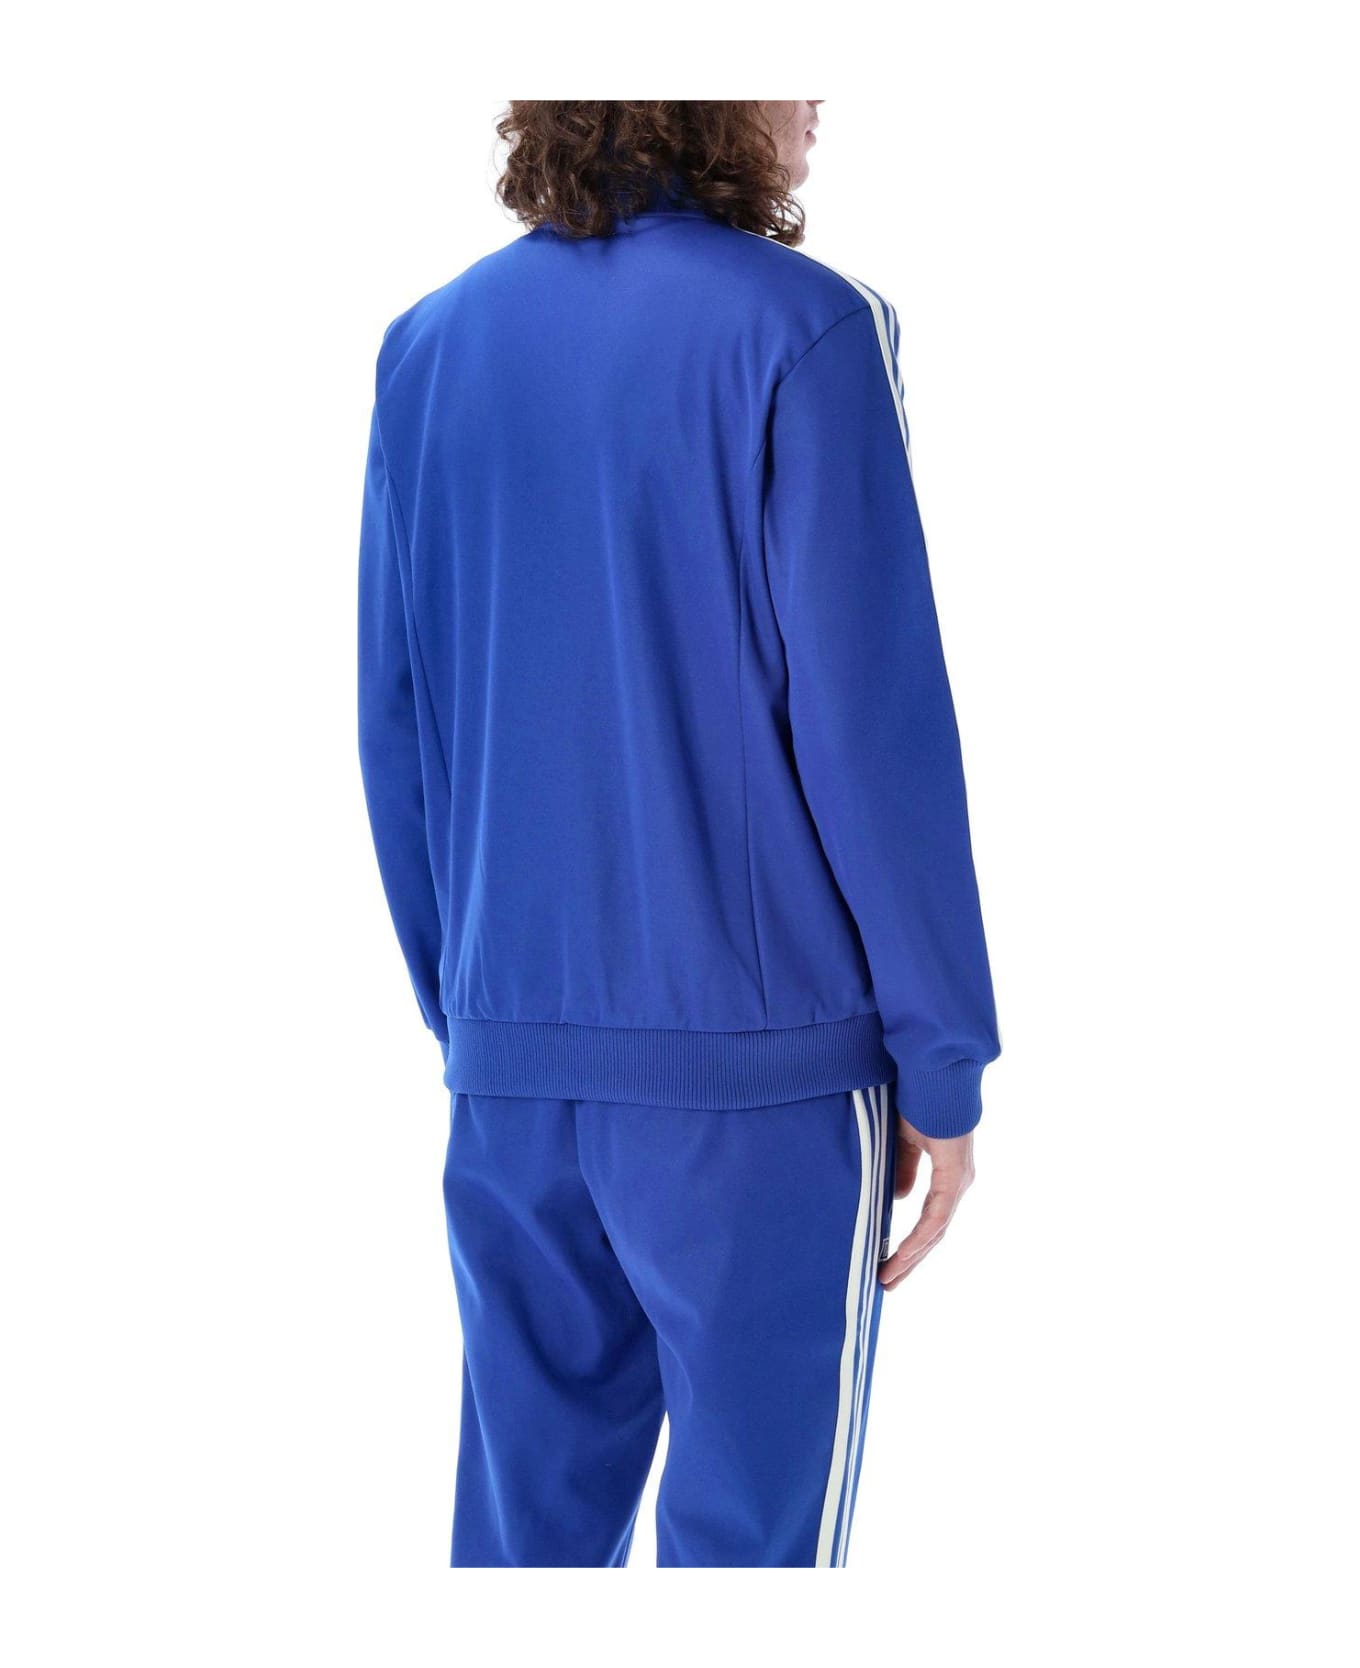 Adidas Originals Zip-up High Neck Sweatshirt - Gnawed Blue